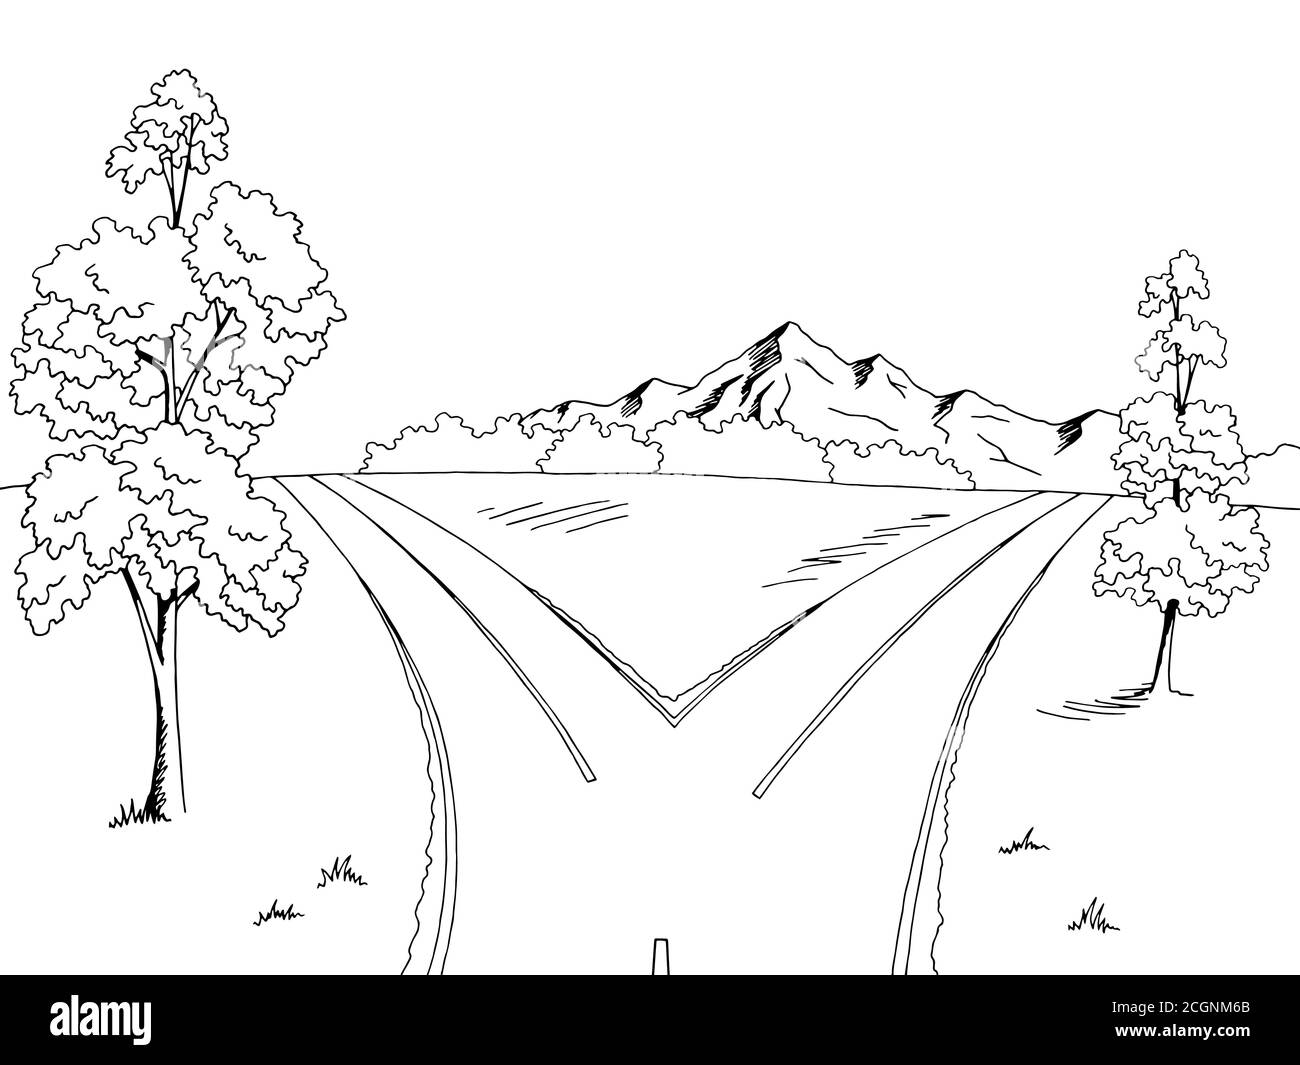 Straßengabel Grafik schwarz weiß Landschaft Skizze Illustration Vektor Stock Vektor